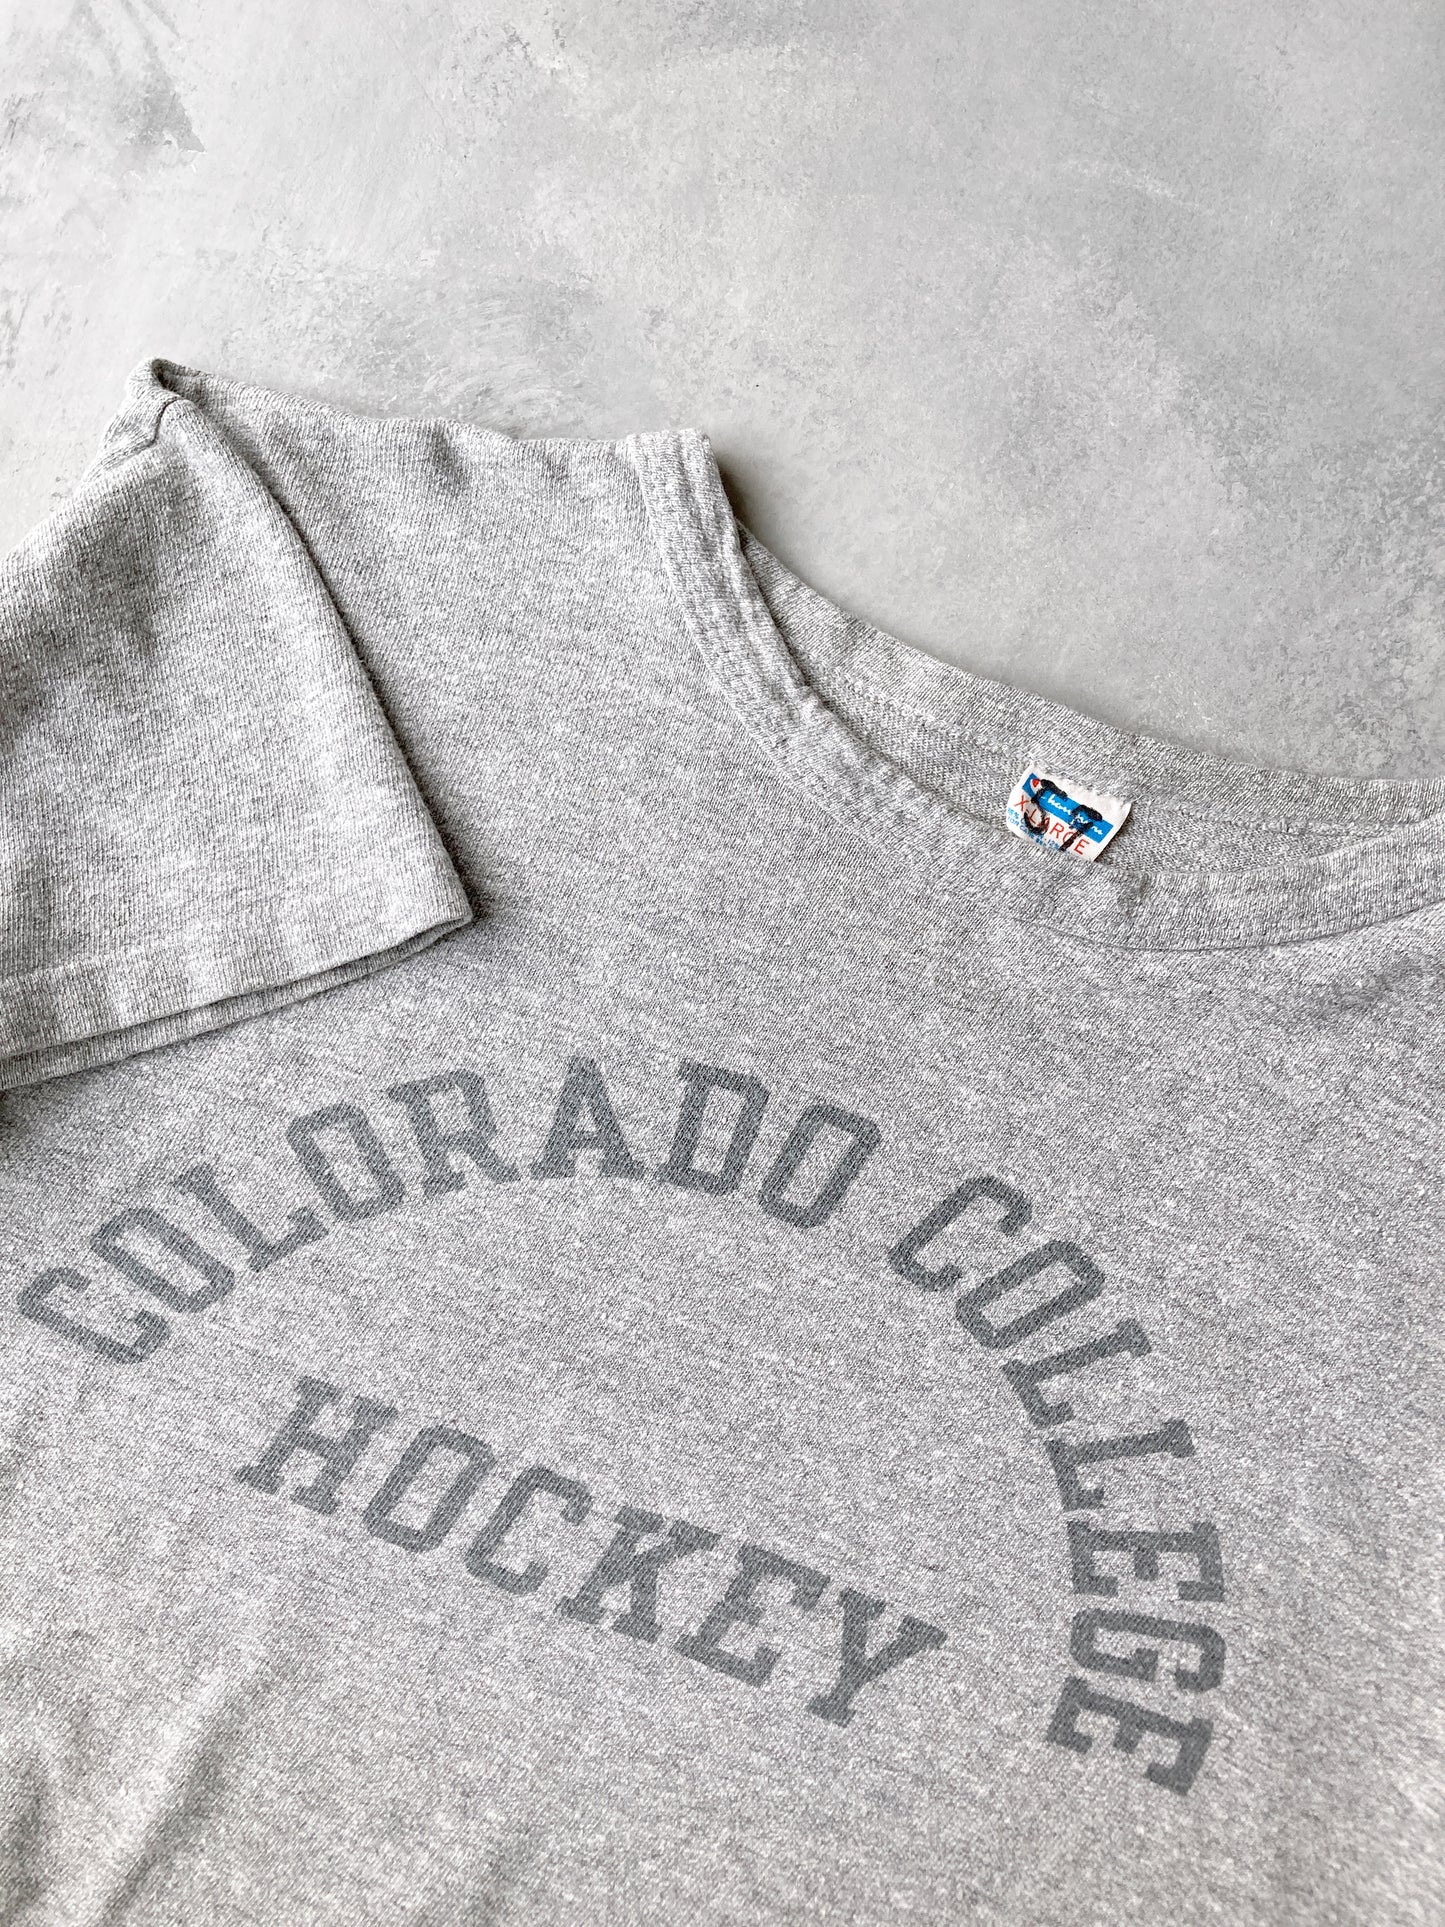 Colorado College Hockey T-Shirt 80's - Large